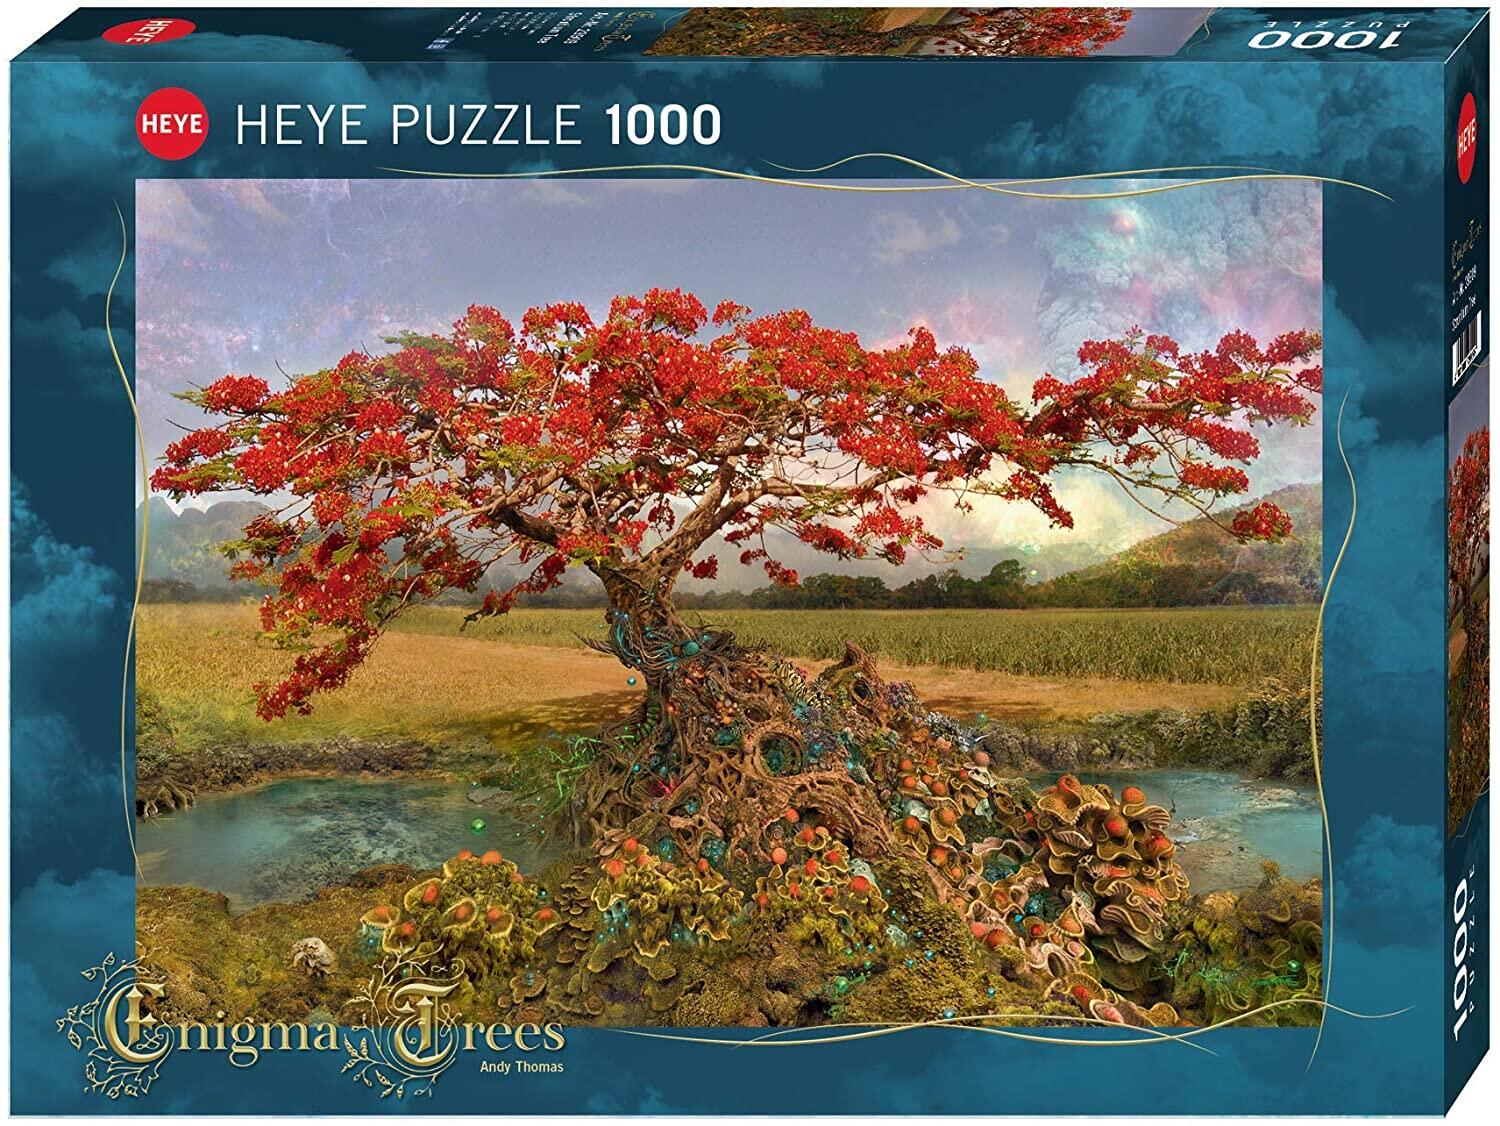 HEYE Puzzle 1000 Teile Enigma Trees Andy Thomas Strontium Tree